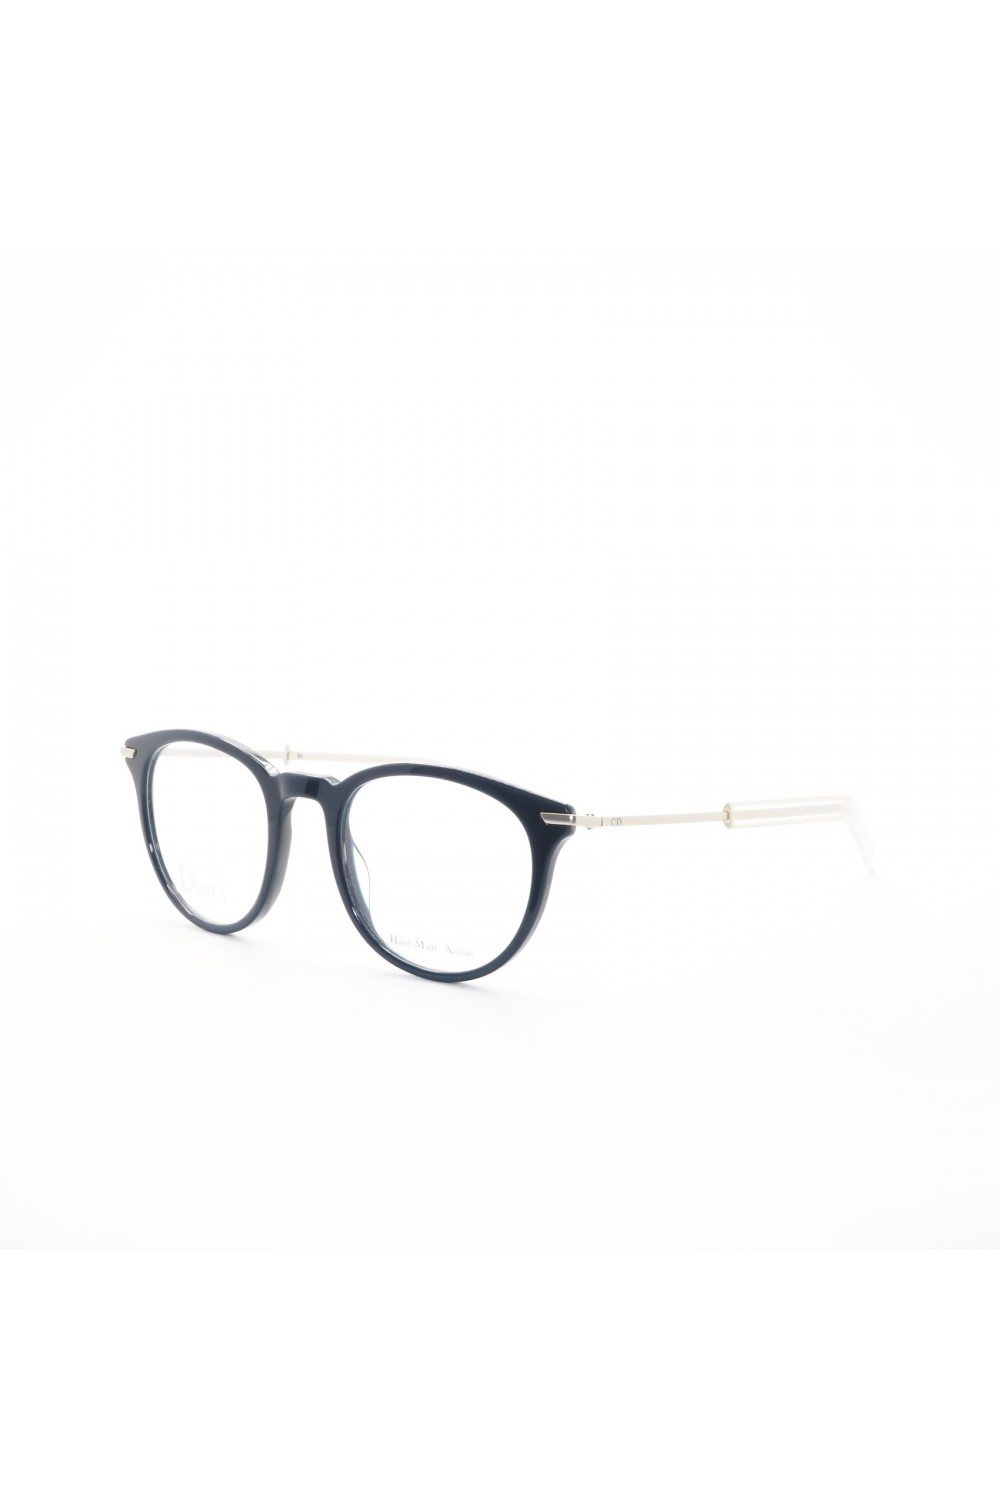 Christian Dior - Occhiali da vista in celluloide tondi per uomo blu -